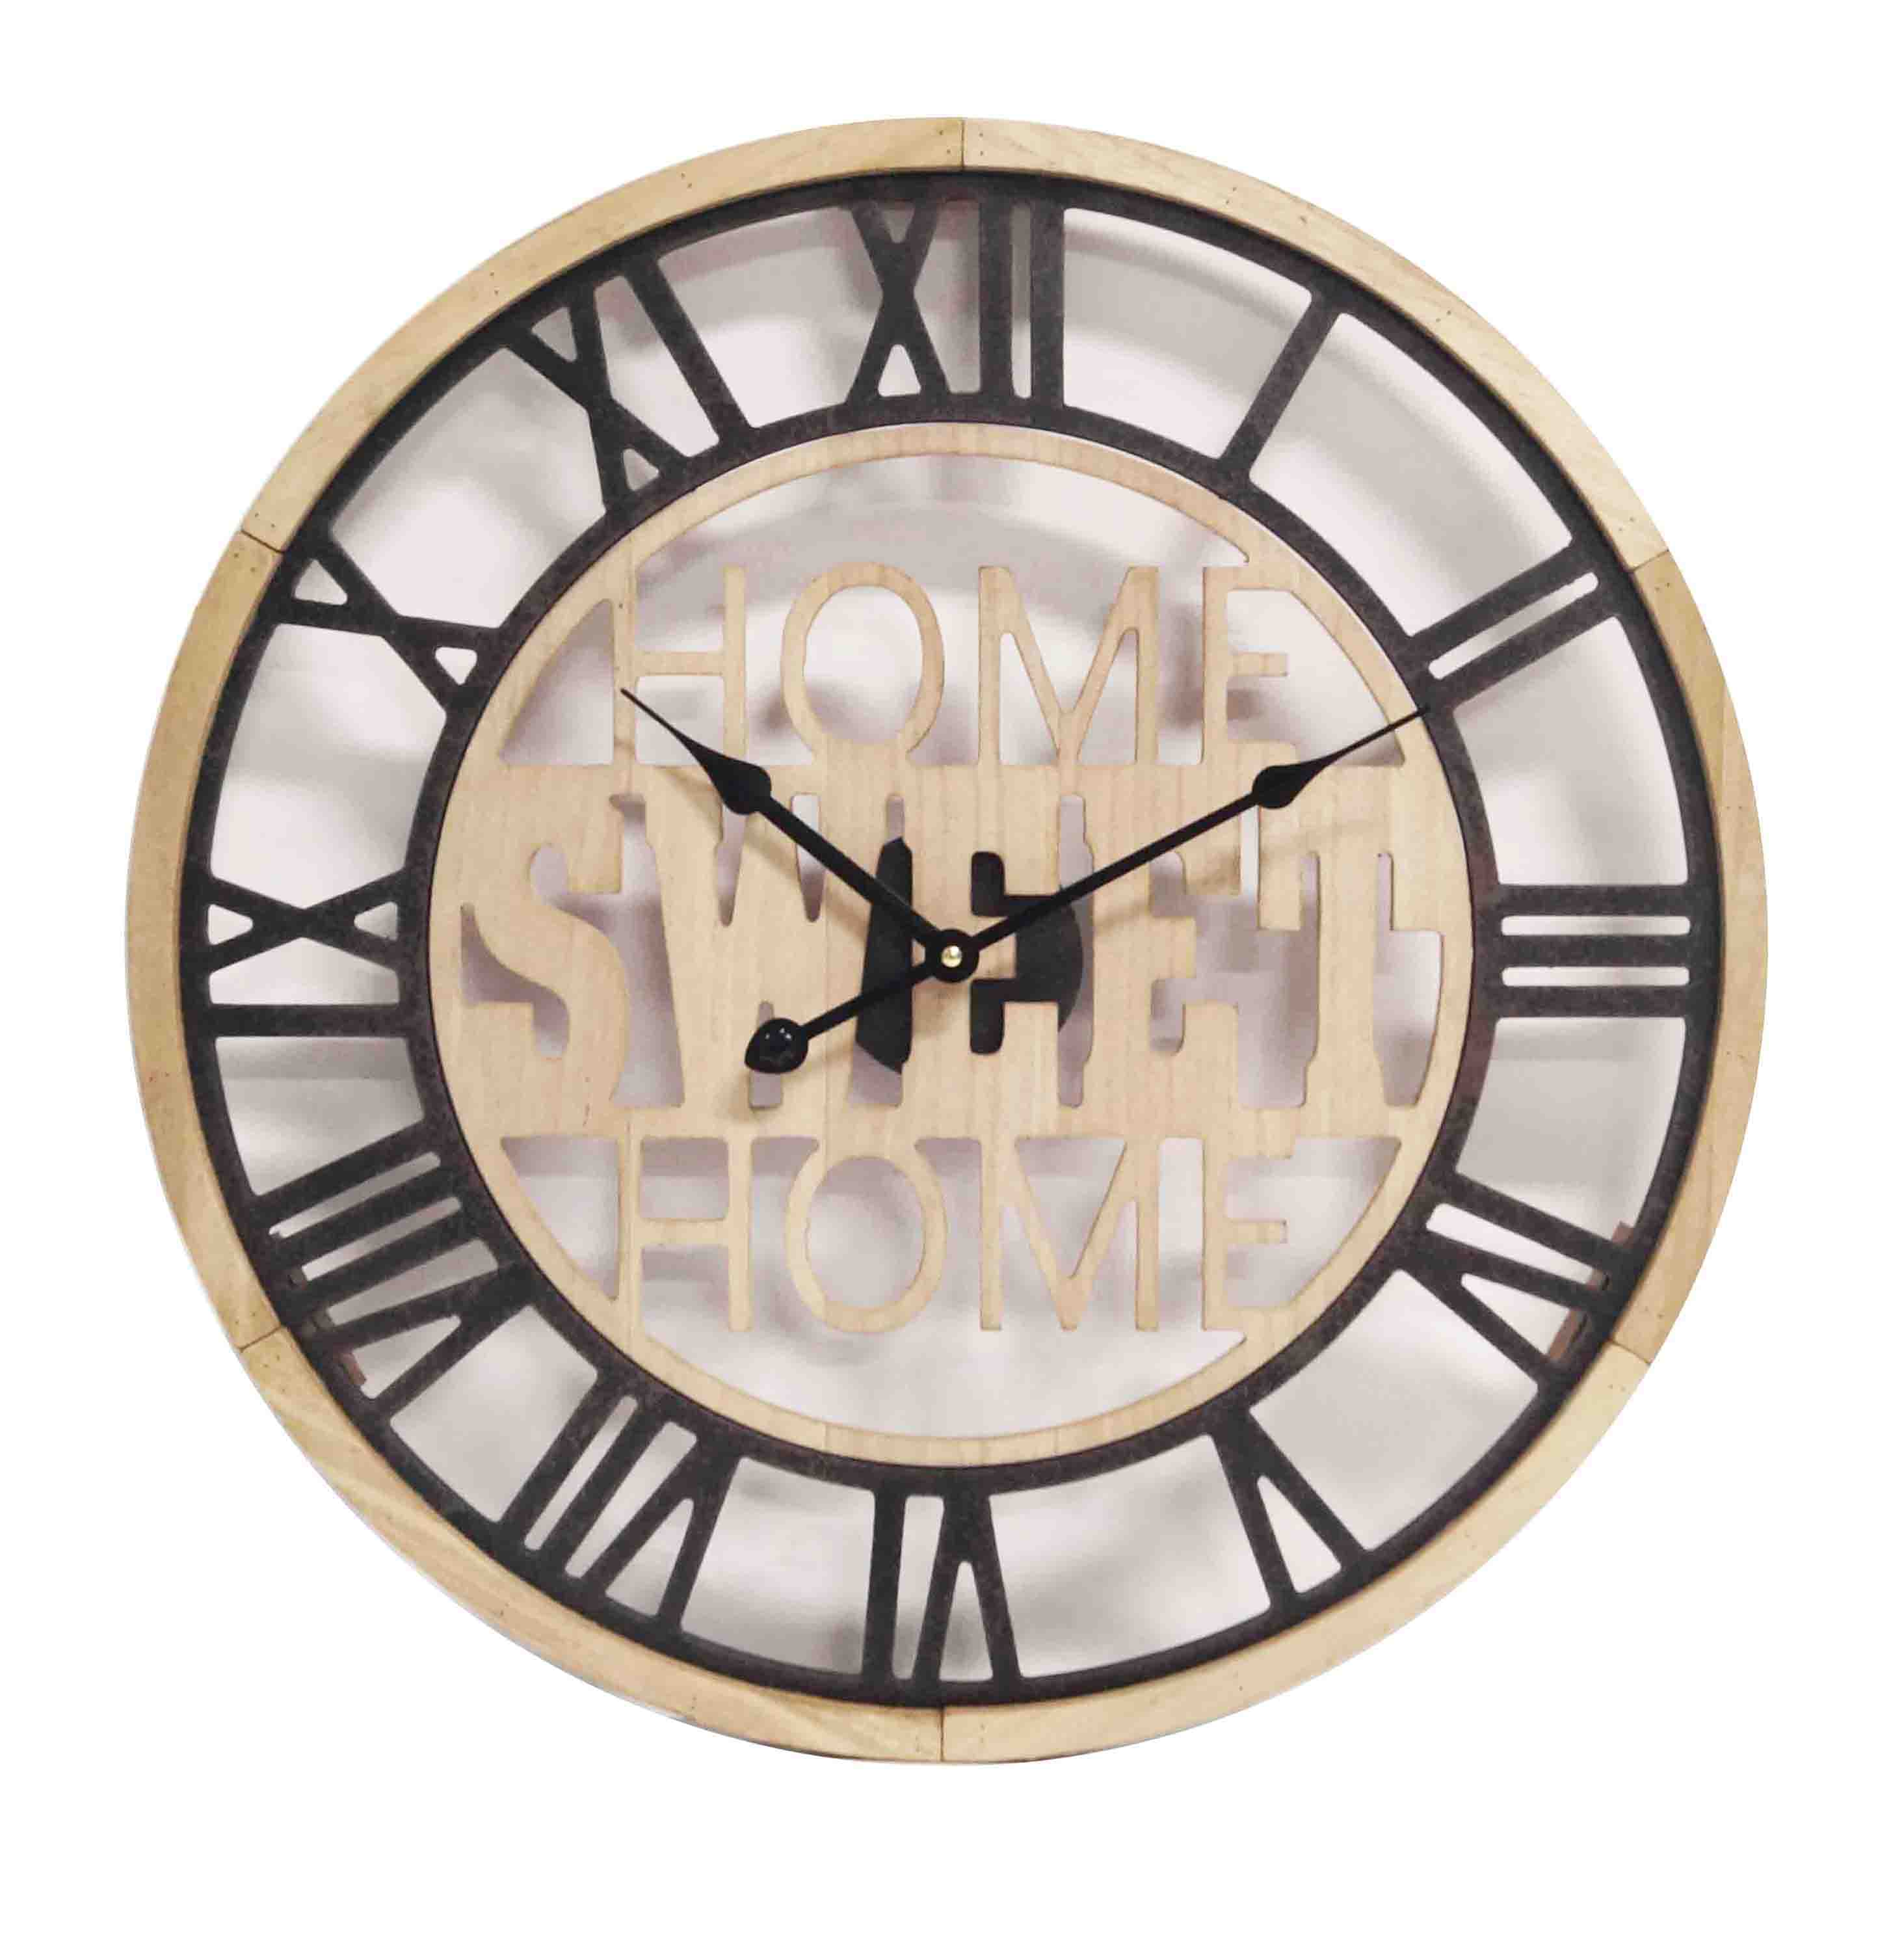 Wooden Decorative Round Wall Clock Quality Quartz Battery Operated Wall Clocks